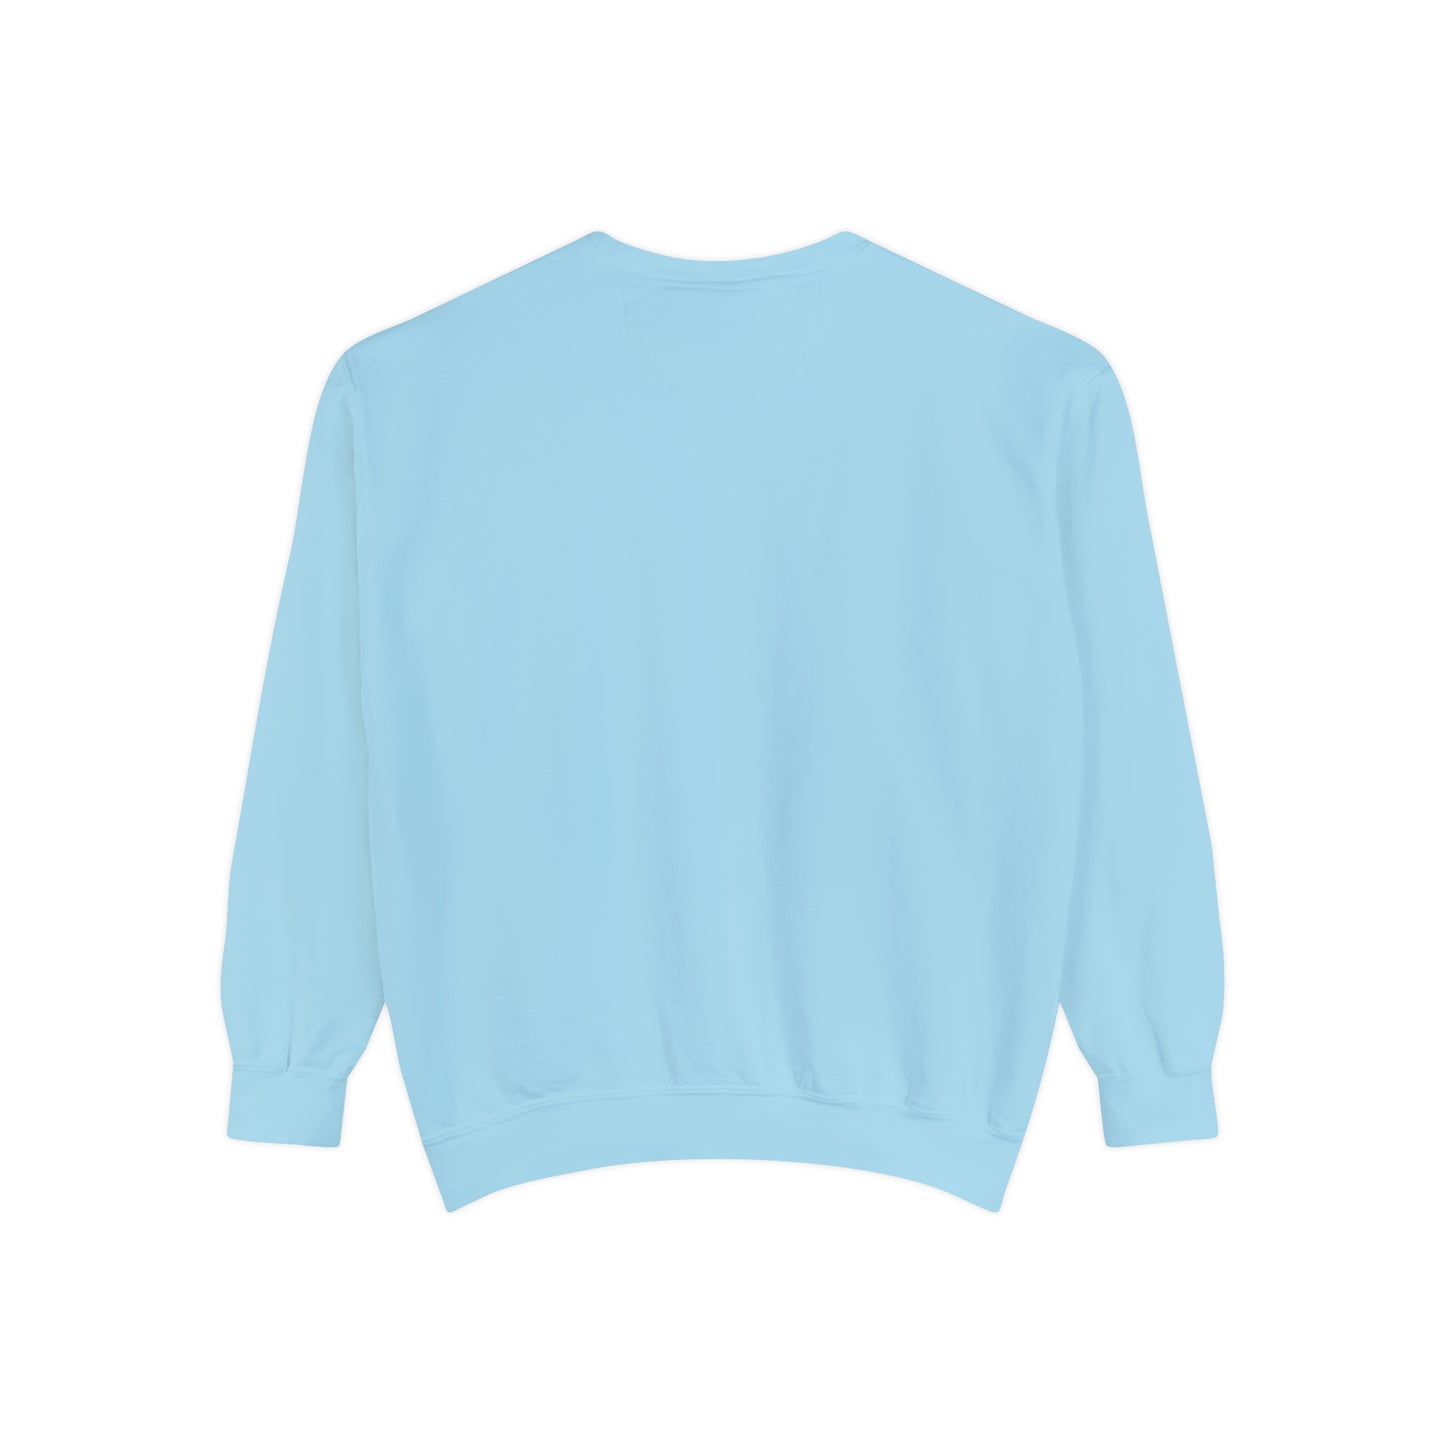 I’m having a meltdown comfort colored Unisex sweatshirt